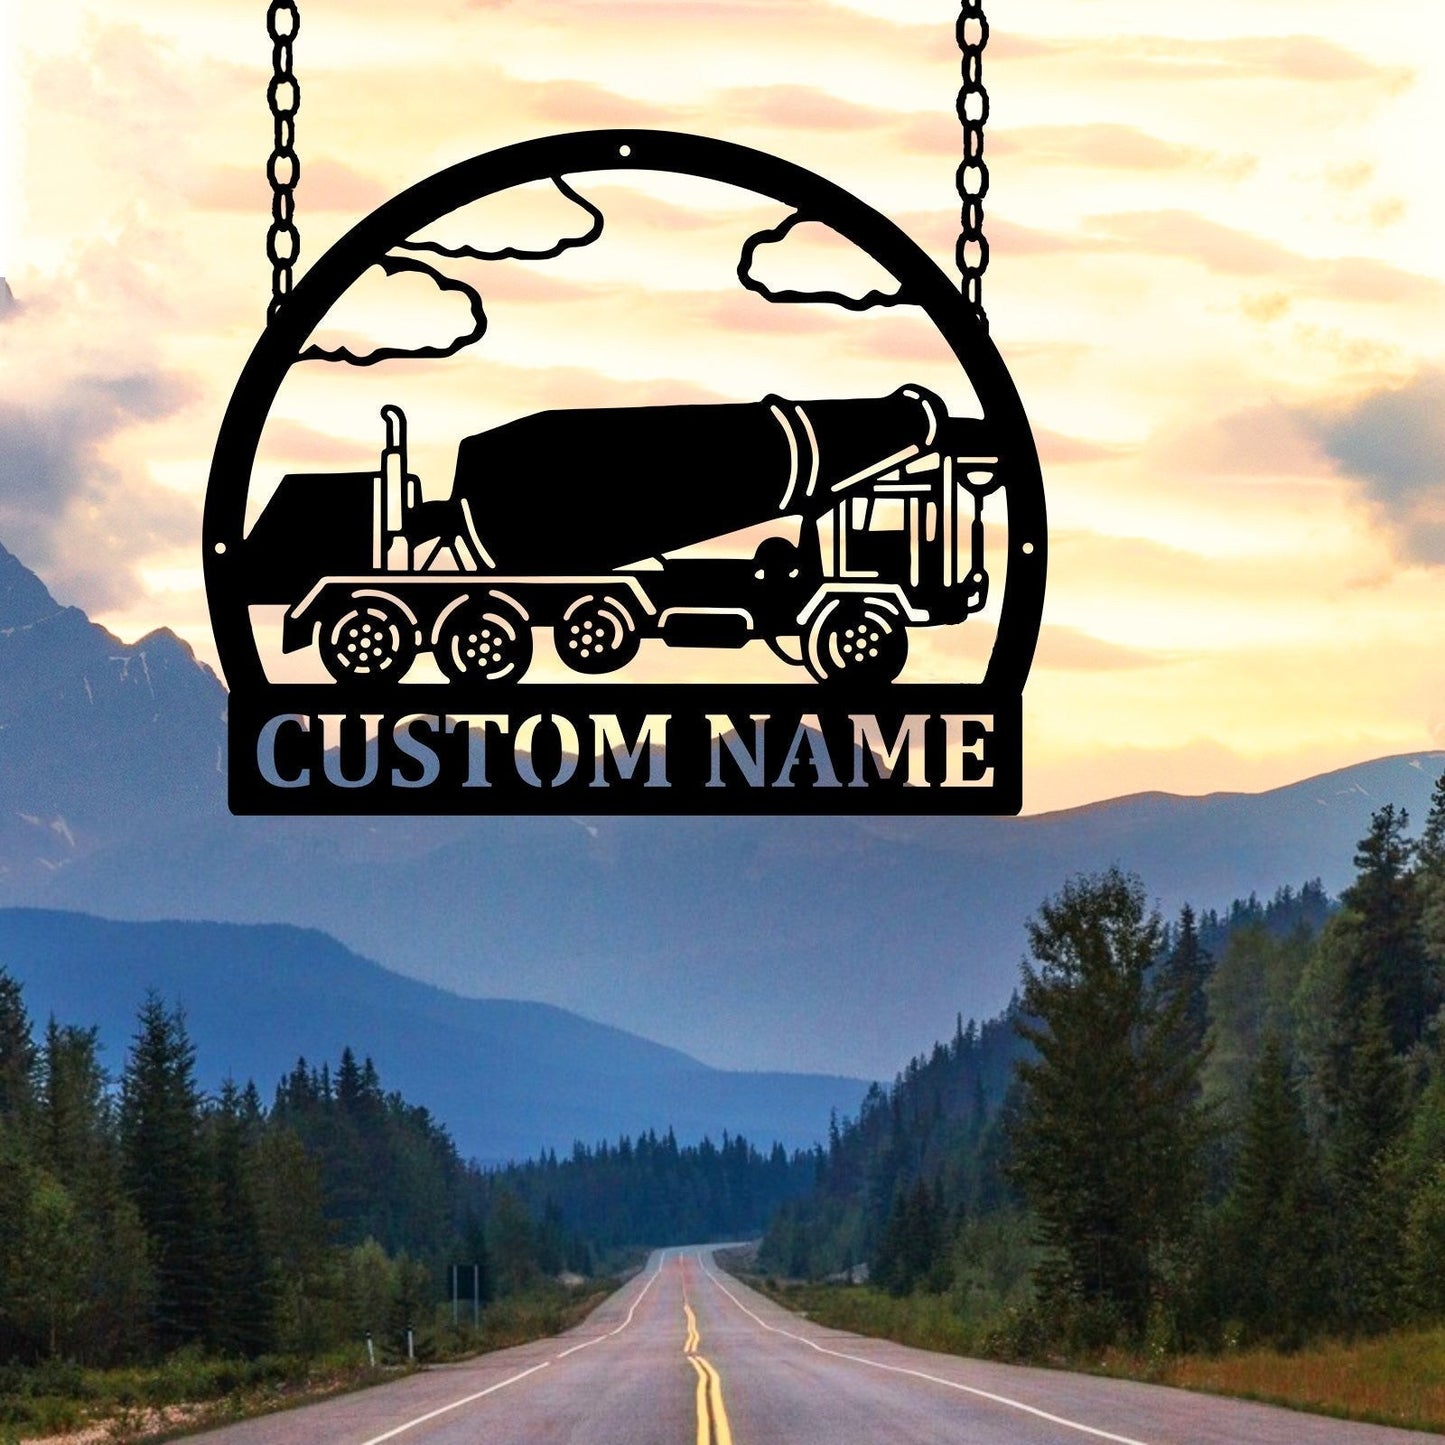 Custom Concrete Mixer Truck Vehicle Metal Sign - Metal Decor Wall Art - Heavy Equipment Operator Gifts